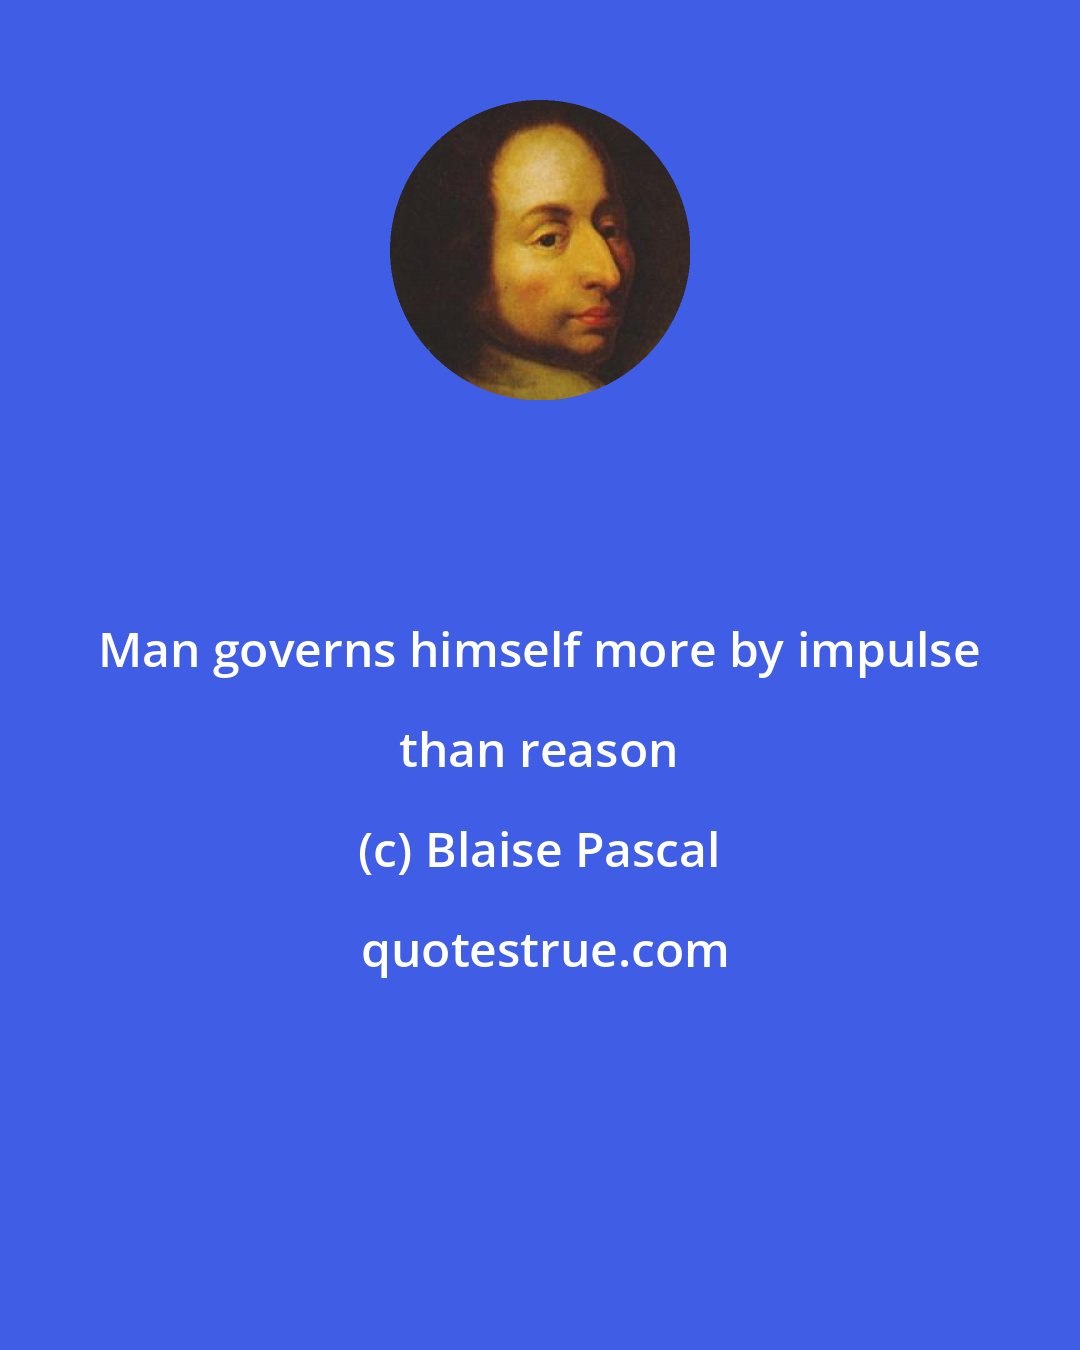 Blaise Pascal: Man governs himself more by impulse than reason